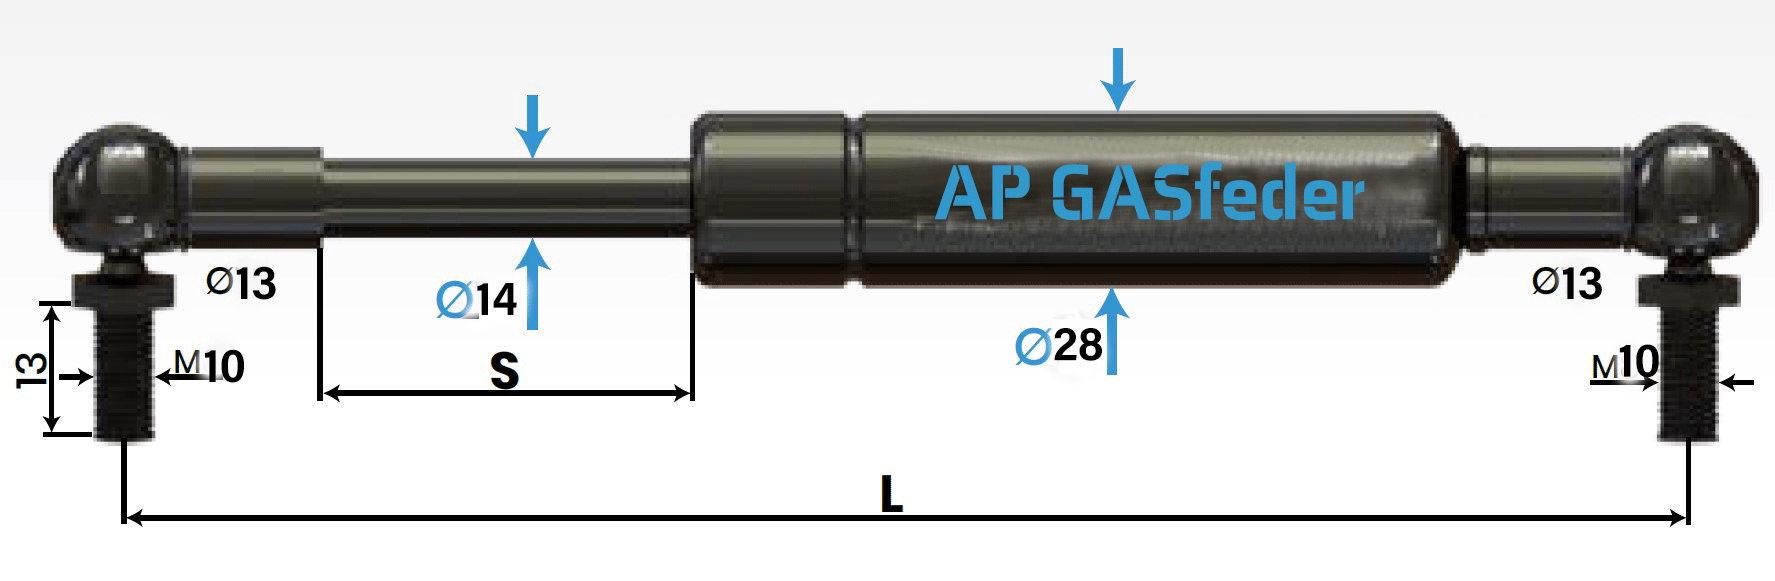 Picture of AP GASfeder 1000N, 14/28, Hub(S): 500 mm, Länge (L): 1135 mm,  Alternatvie SRST.2394LH